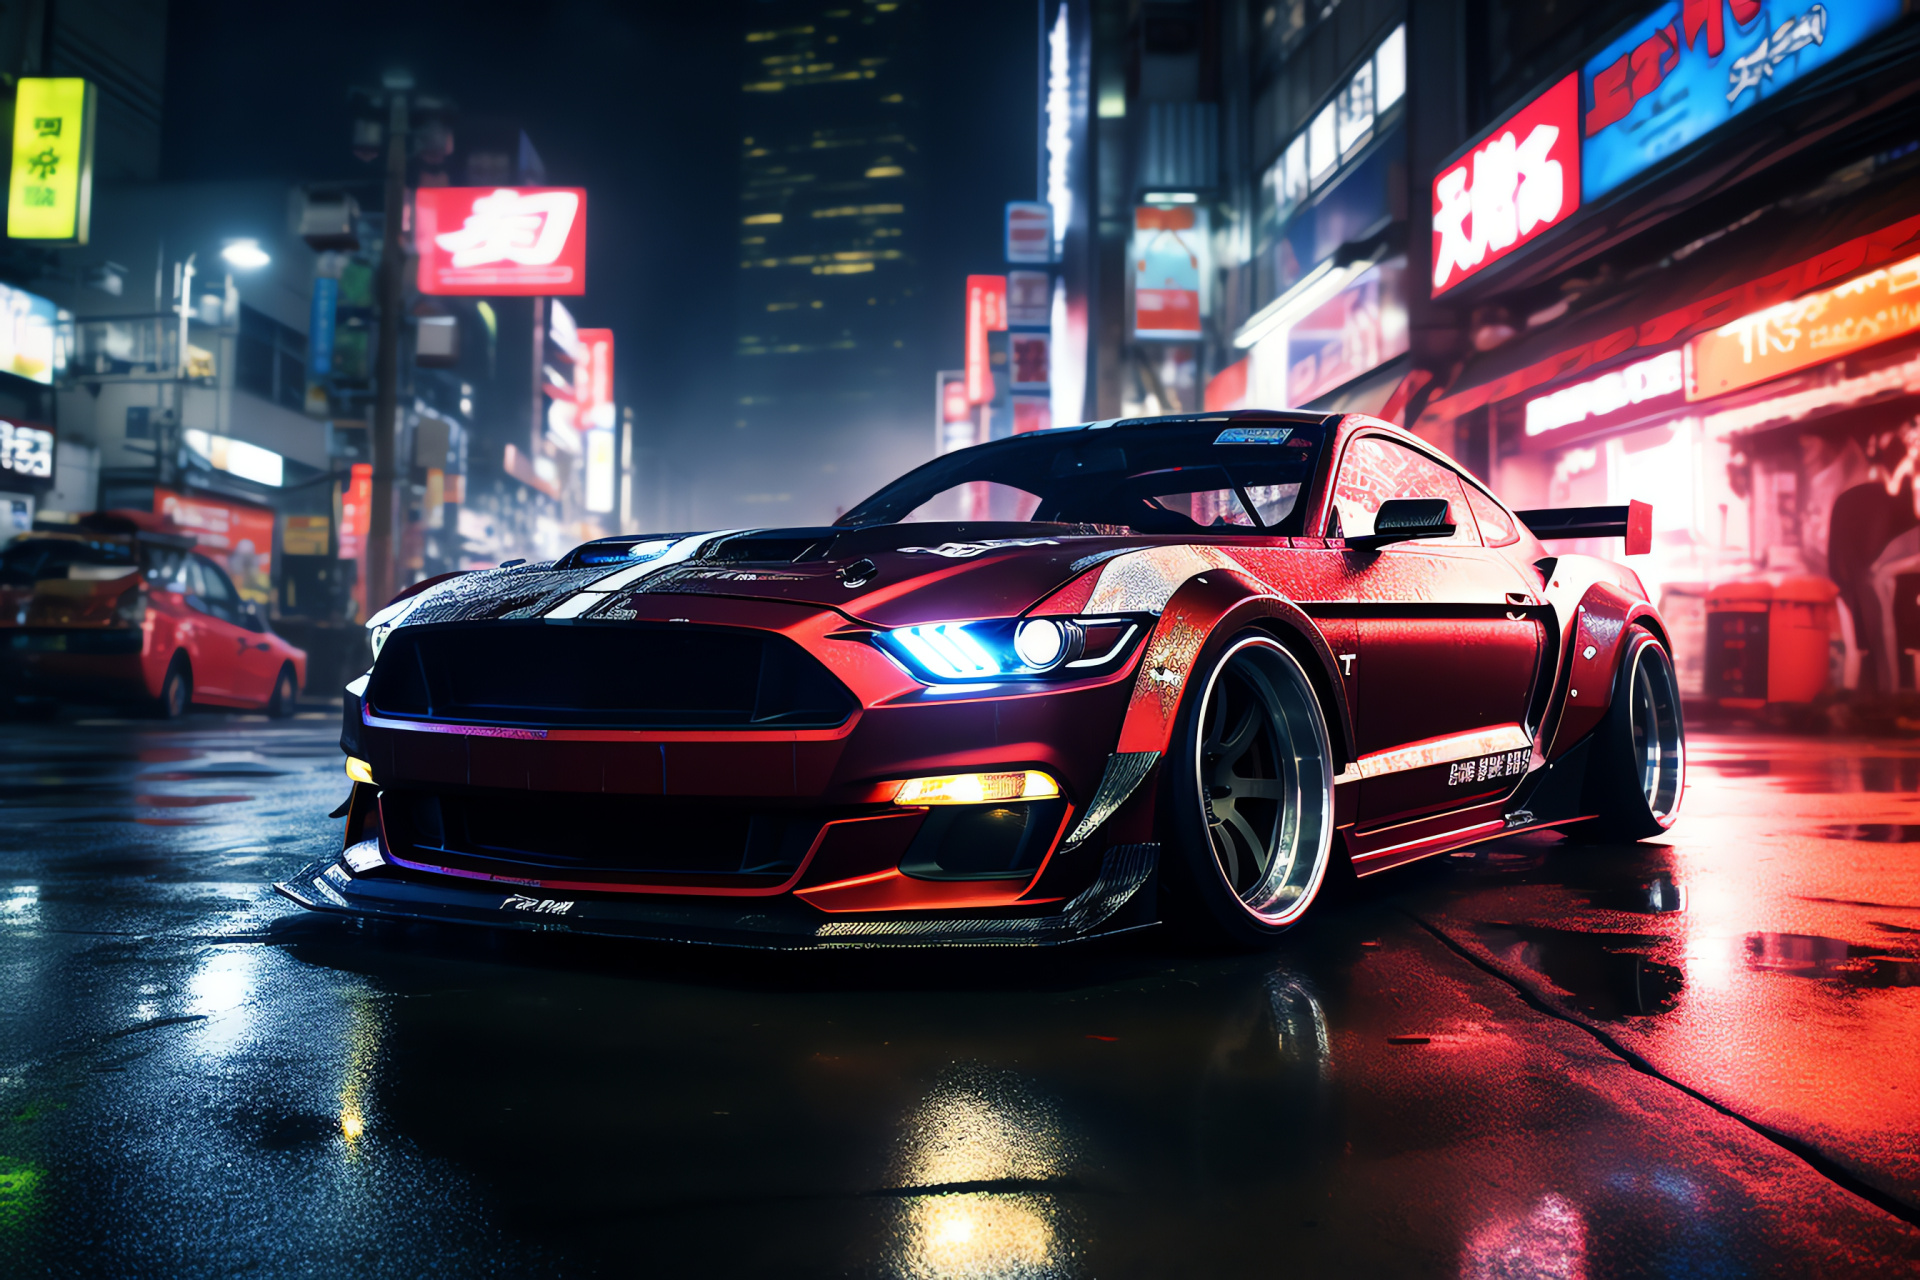 Drifting Mustang Tokyo, GT style night drive, Shibuya's electric mood, Tire marking precision, Luminous city velocity, HD Desktop Image